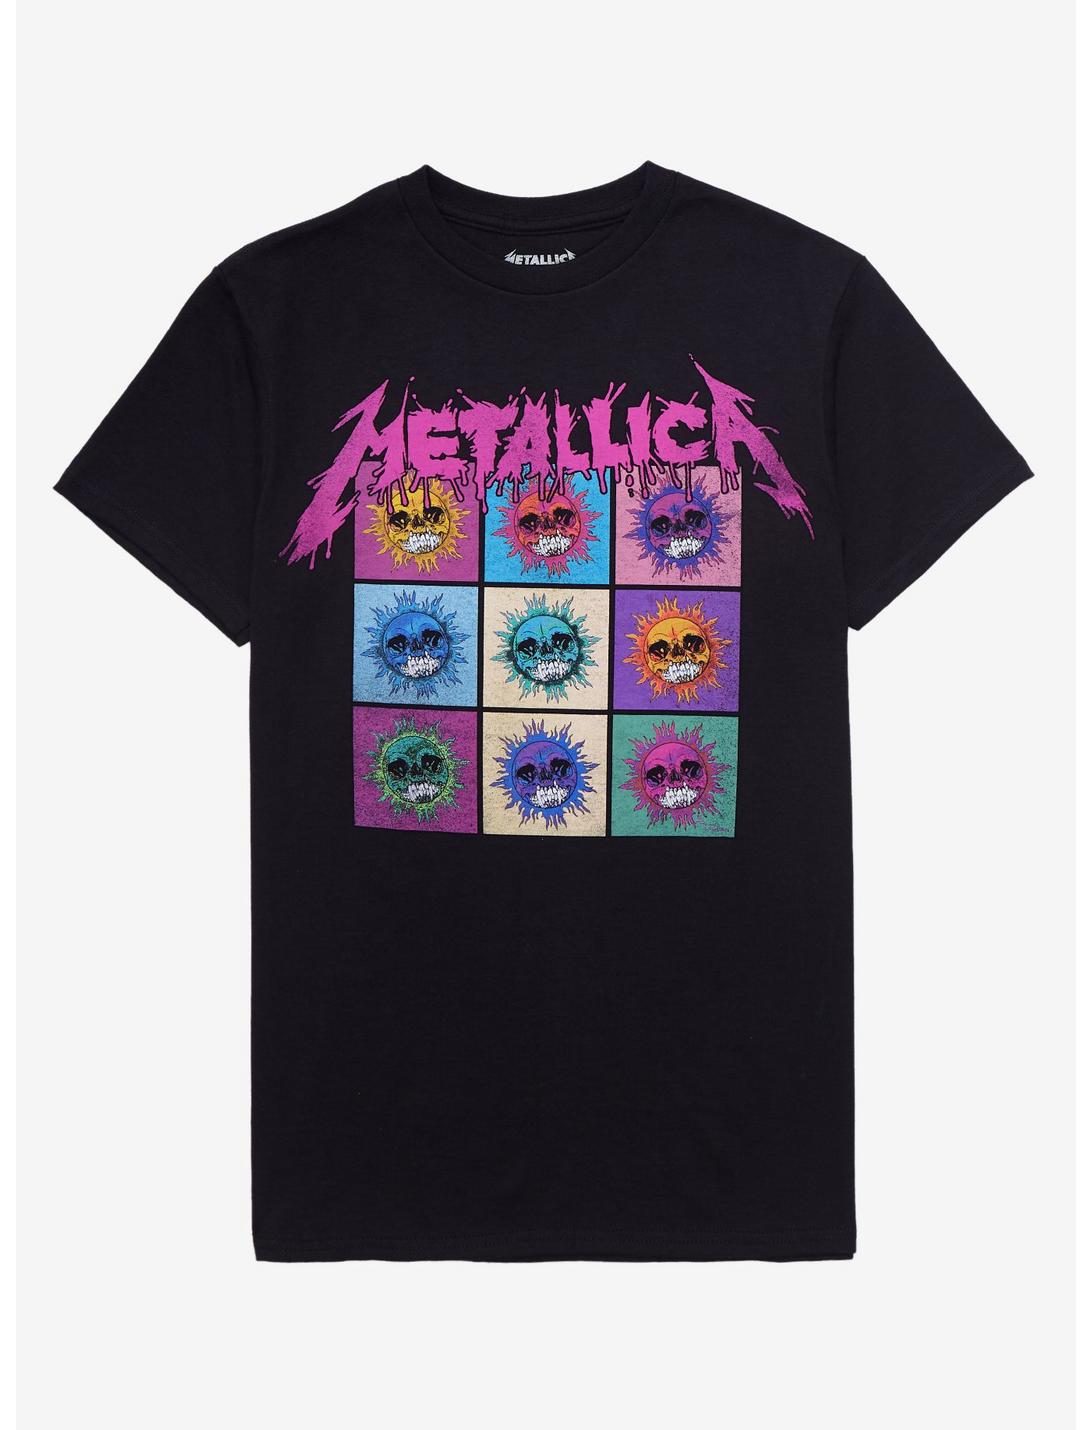 Metallica Splattered Skulls Grid Girls T-Shirt, BLACK, hi-res